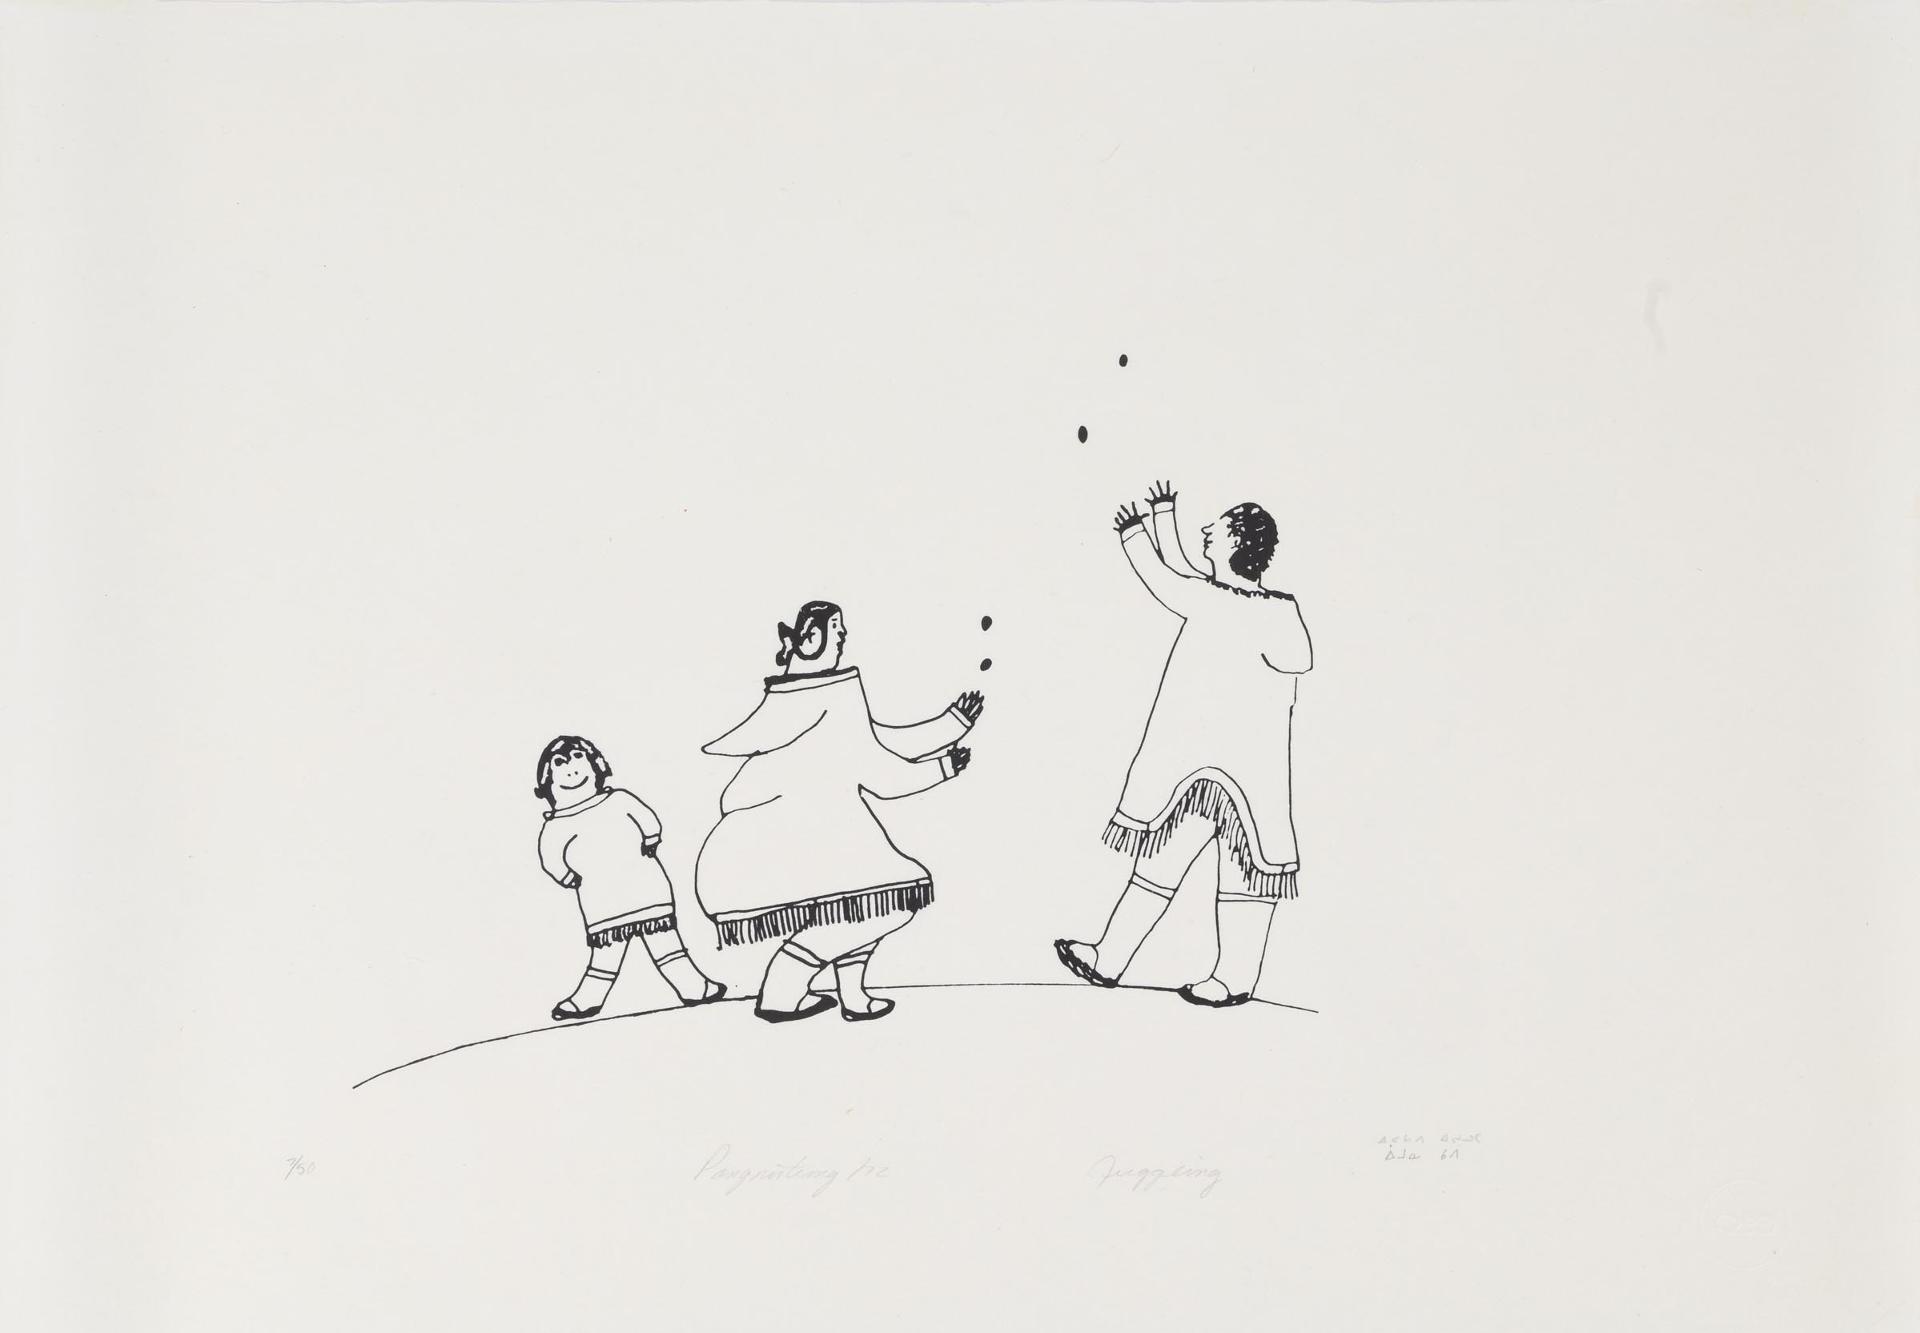 Eleesapee Ishulutaq (1925-2018) - Juggling, 1972